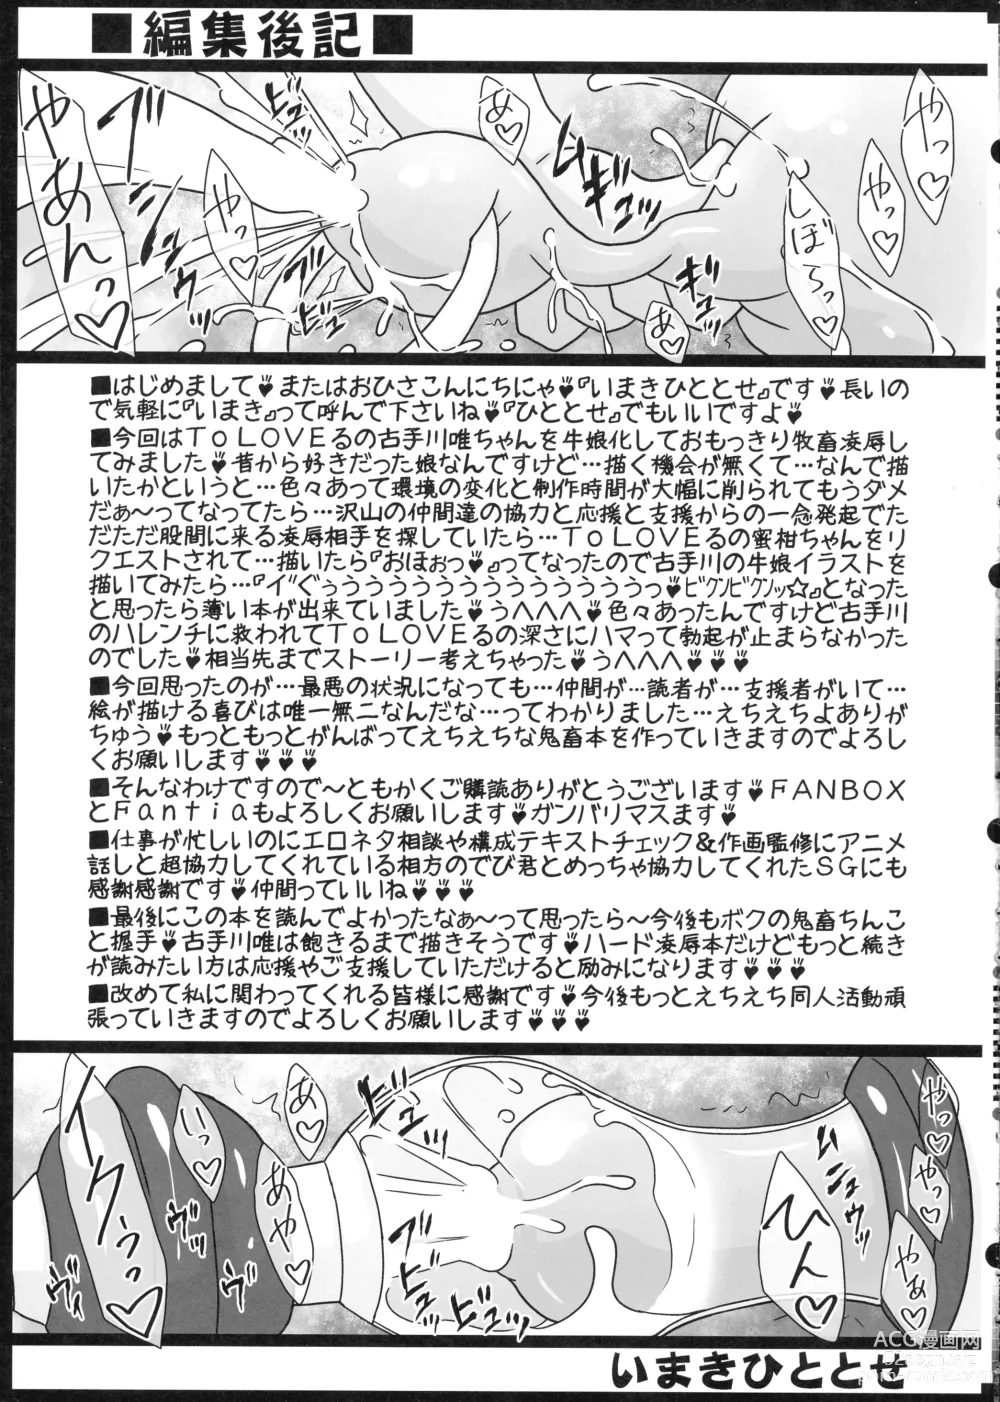 Page 35 of doujinshi Bokuchiku Zetchou Ushiko! Kotegawa Yui